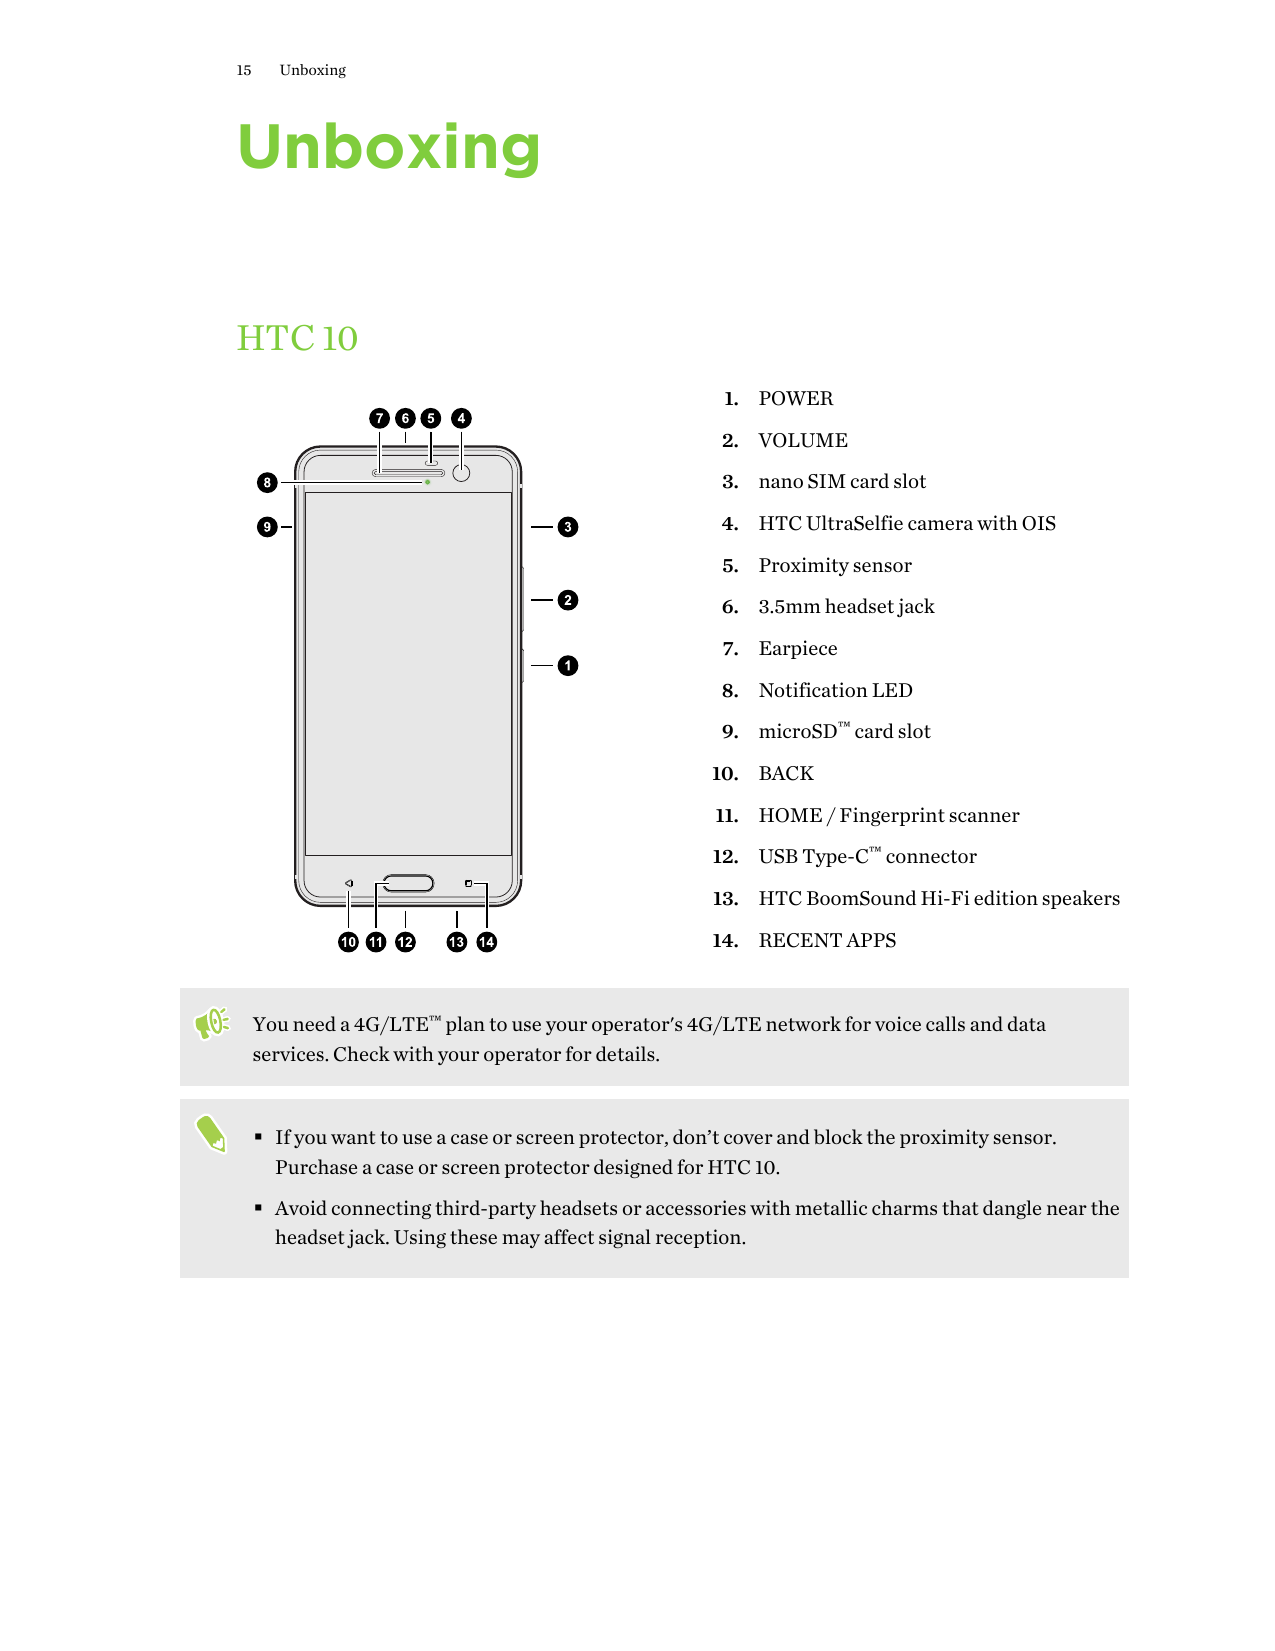 15UnboxingUnboxingHTC 101. POWER2. VOLUME3. nano SIM card slot4. HTC UltraSelfie camera with OIS5. Proximity sensor6. 3.5mm head